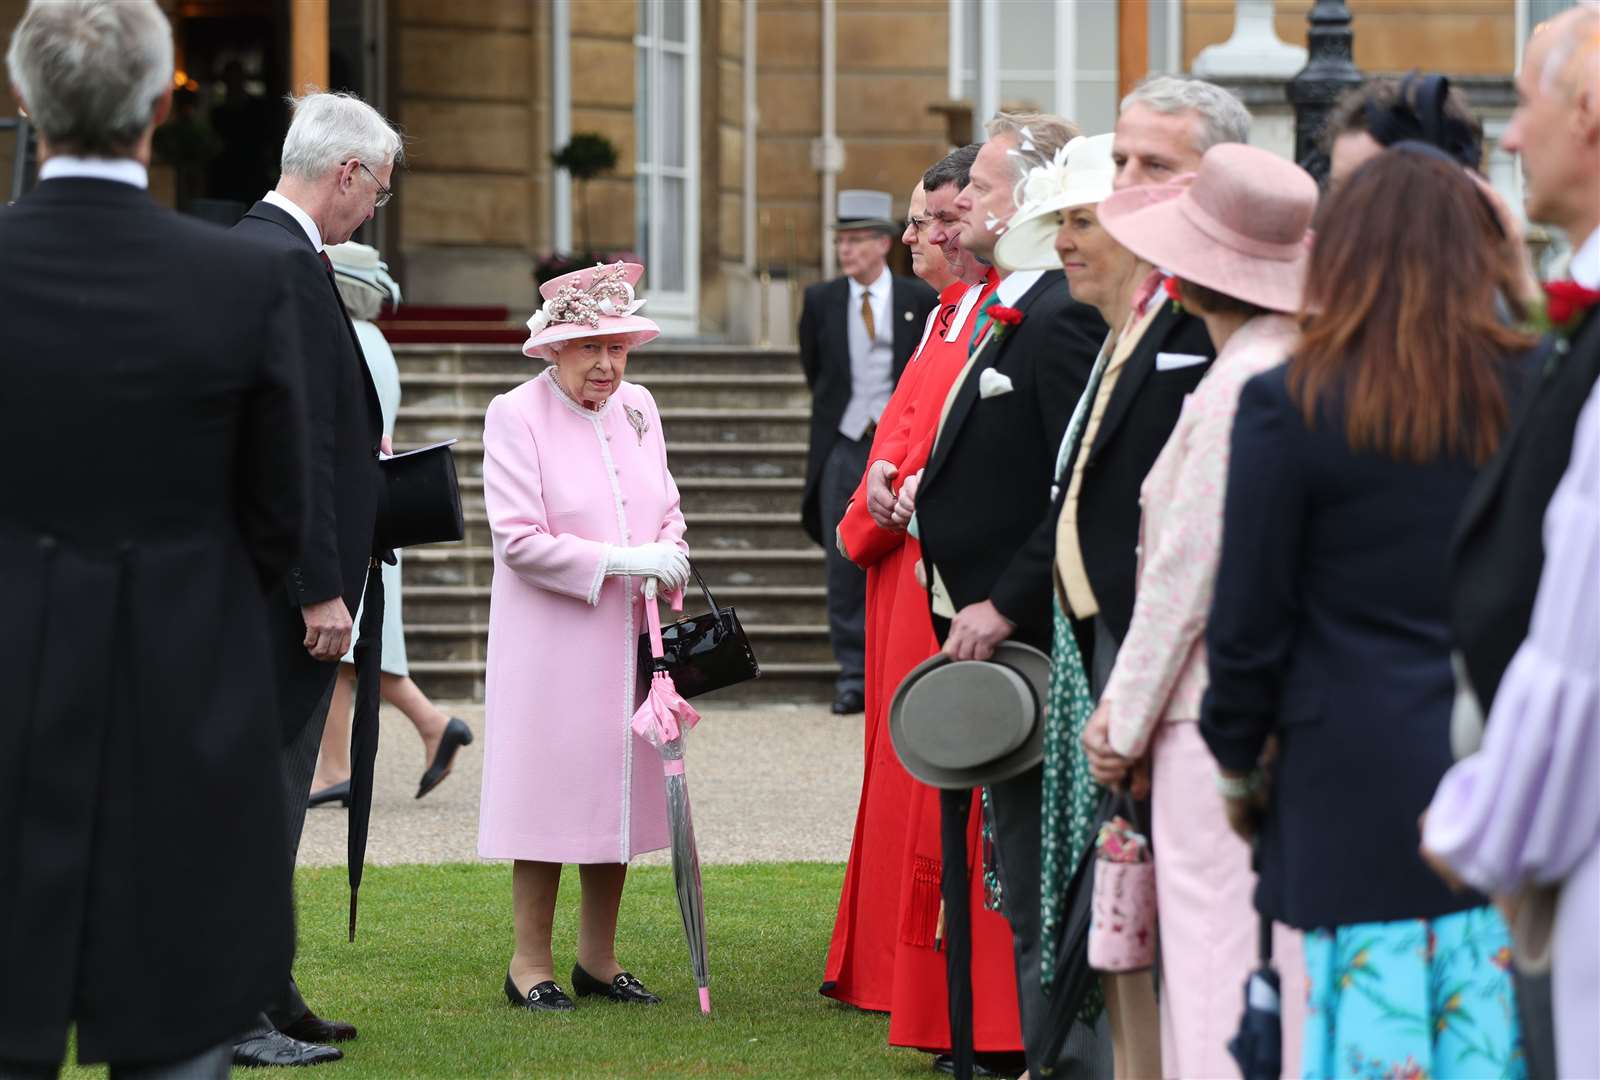 The Queen attending a Buckingham Palace garden party (Yui Mok/PA)